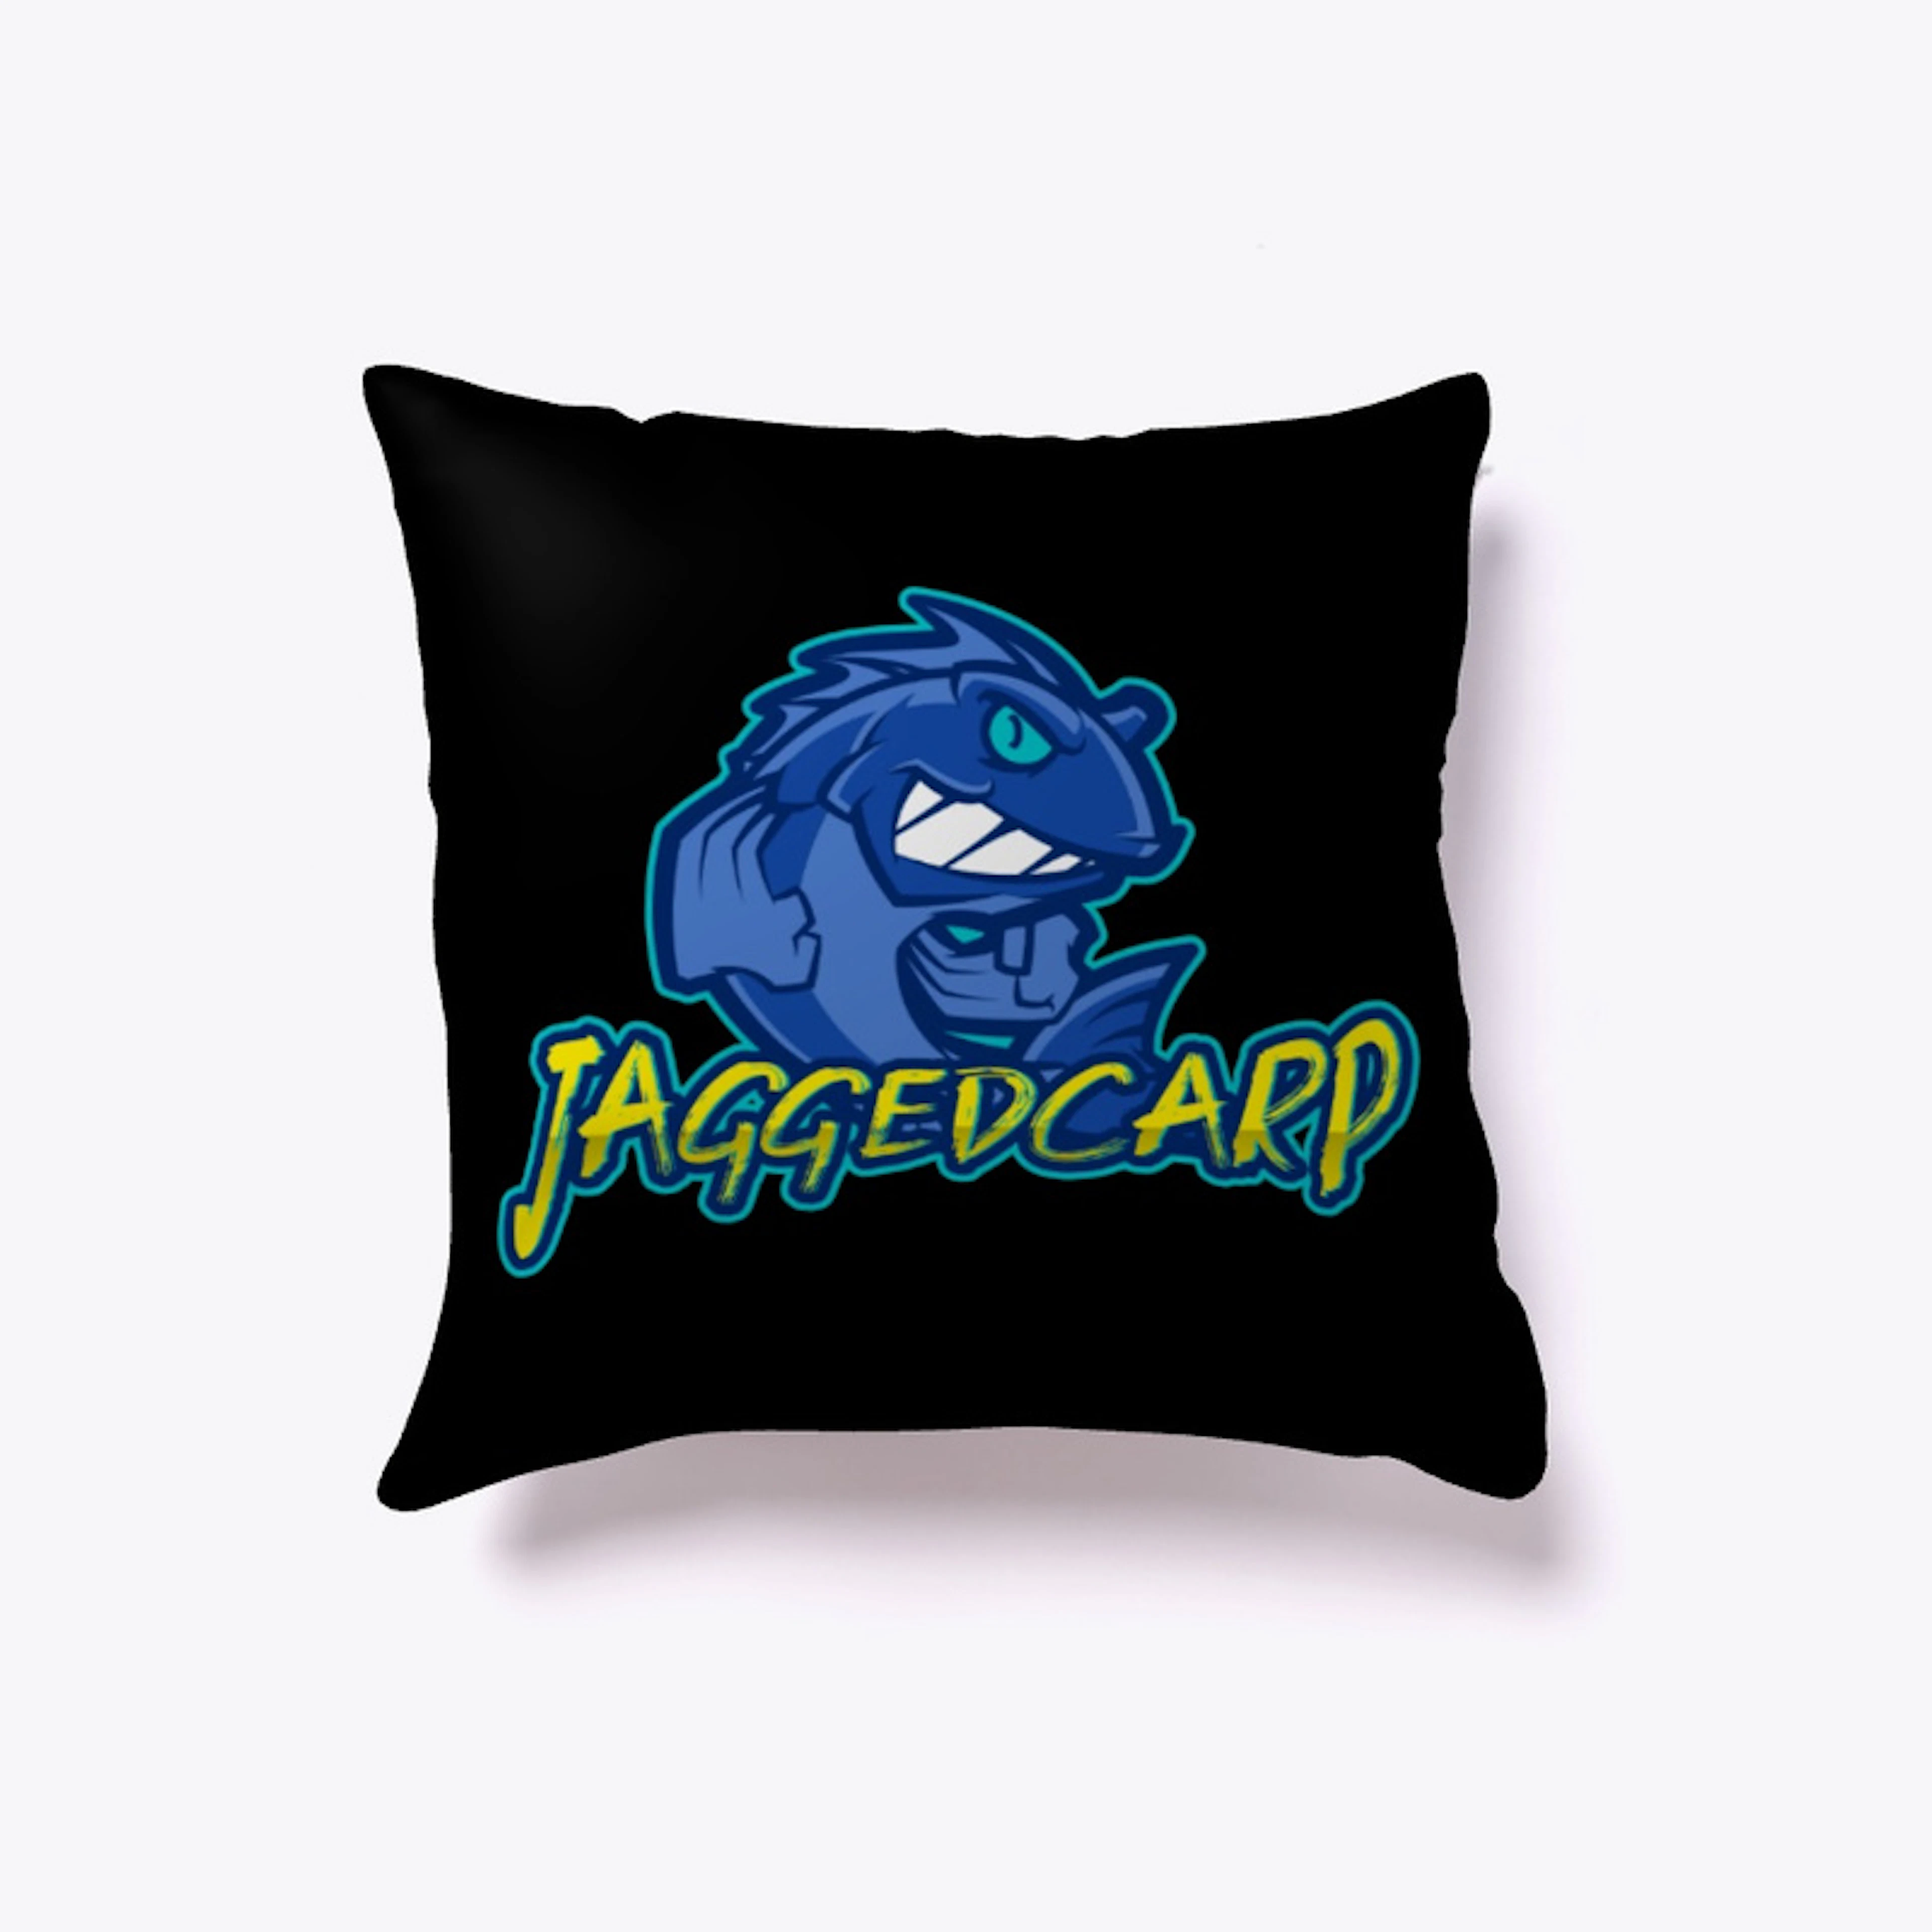 Jagged logo v2 pillow